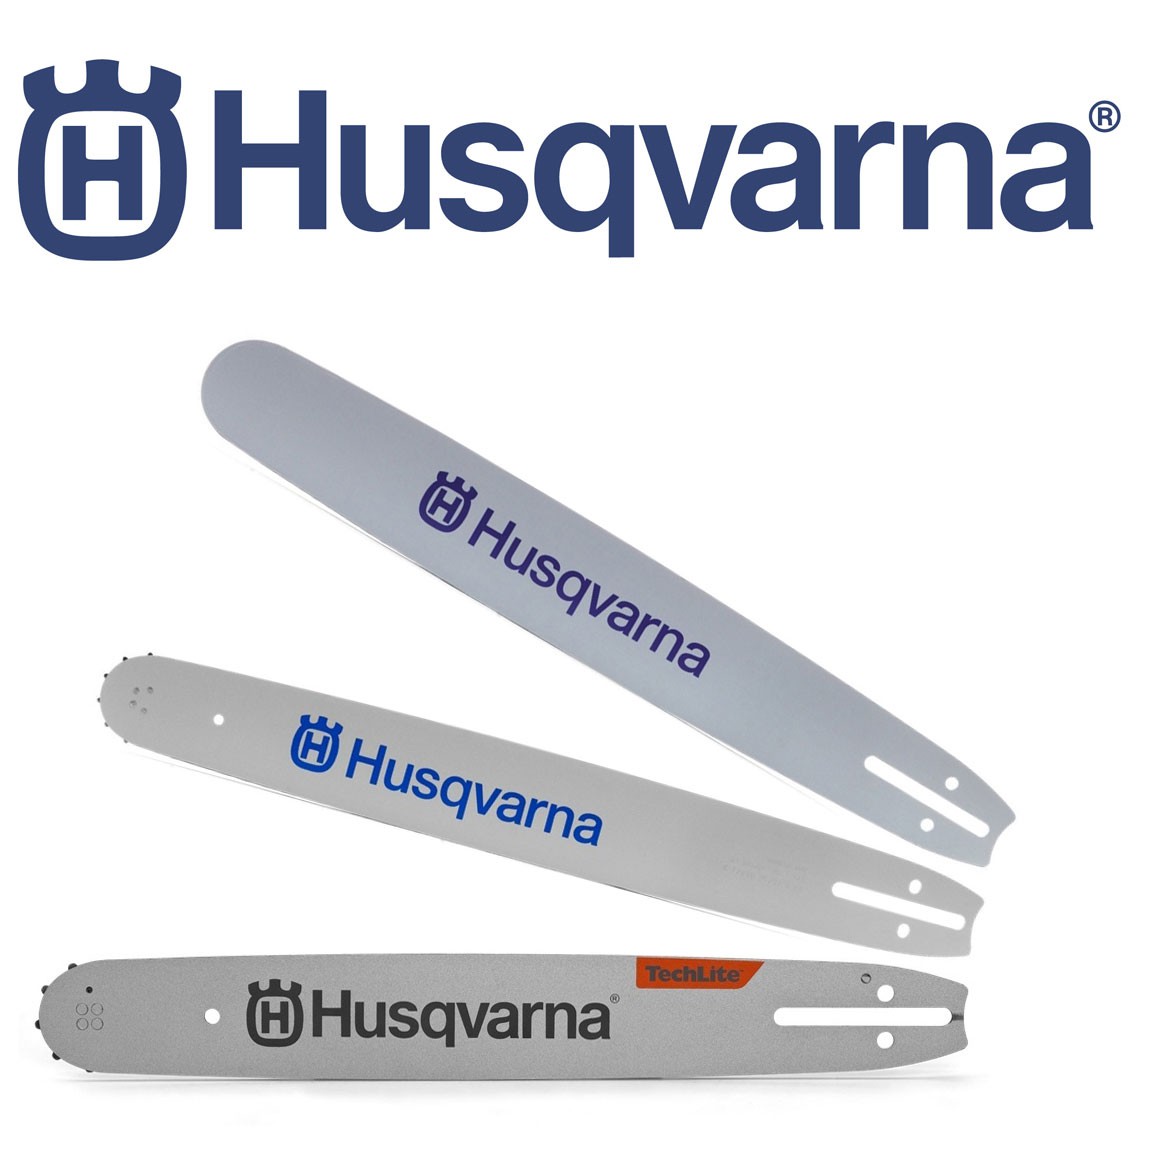 Guide chaîne d'origine HUSQVARNA 35cm - 3/8 - 1.3mm 501 95 92 52